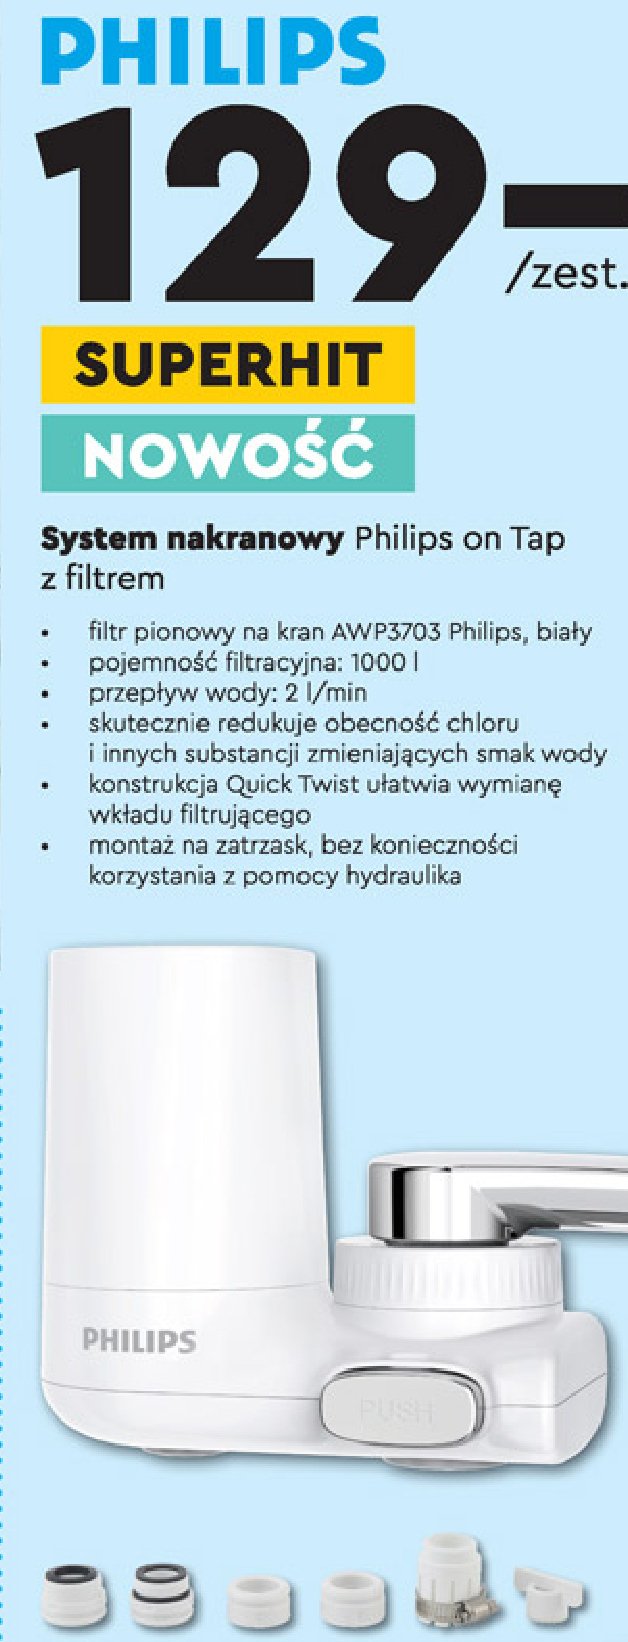 System nakranowy Philips promocja